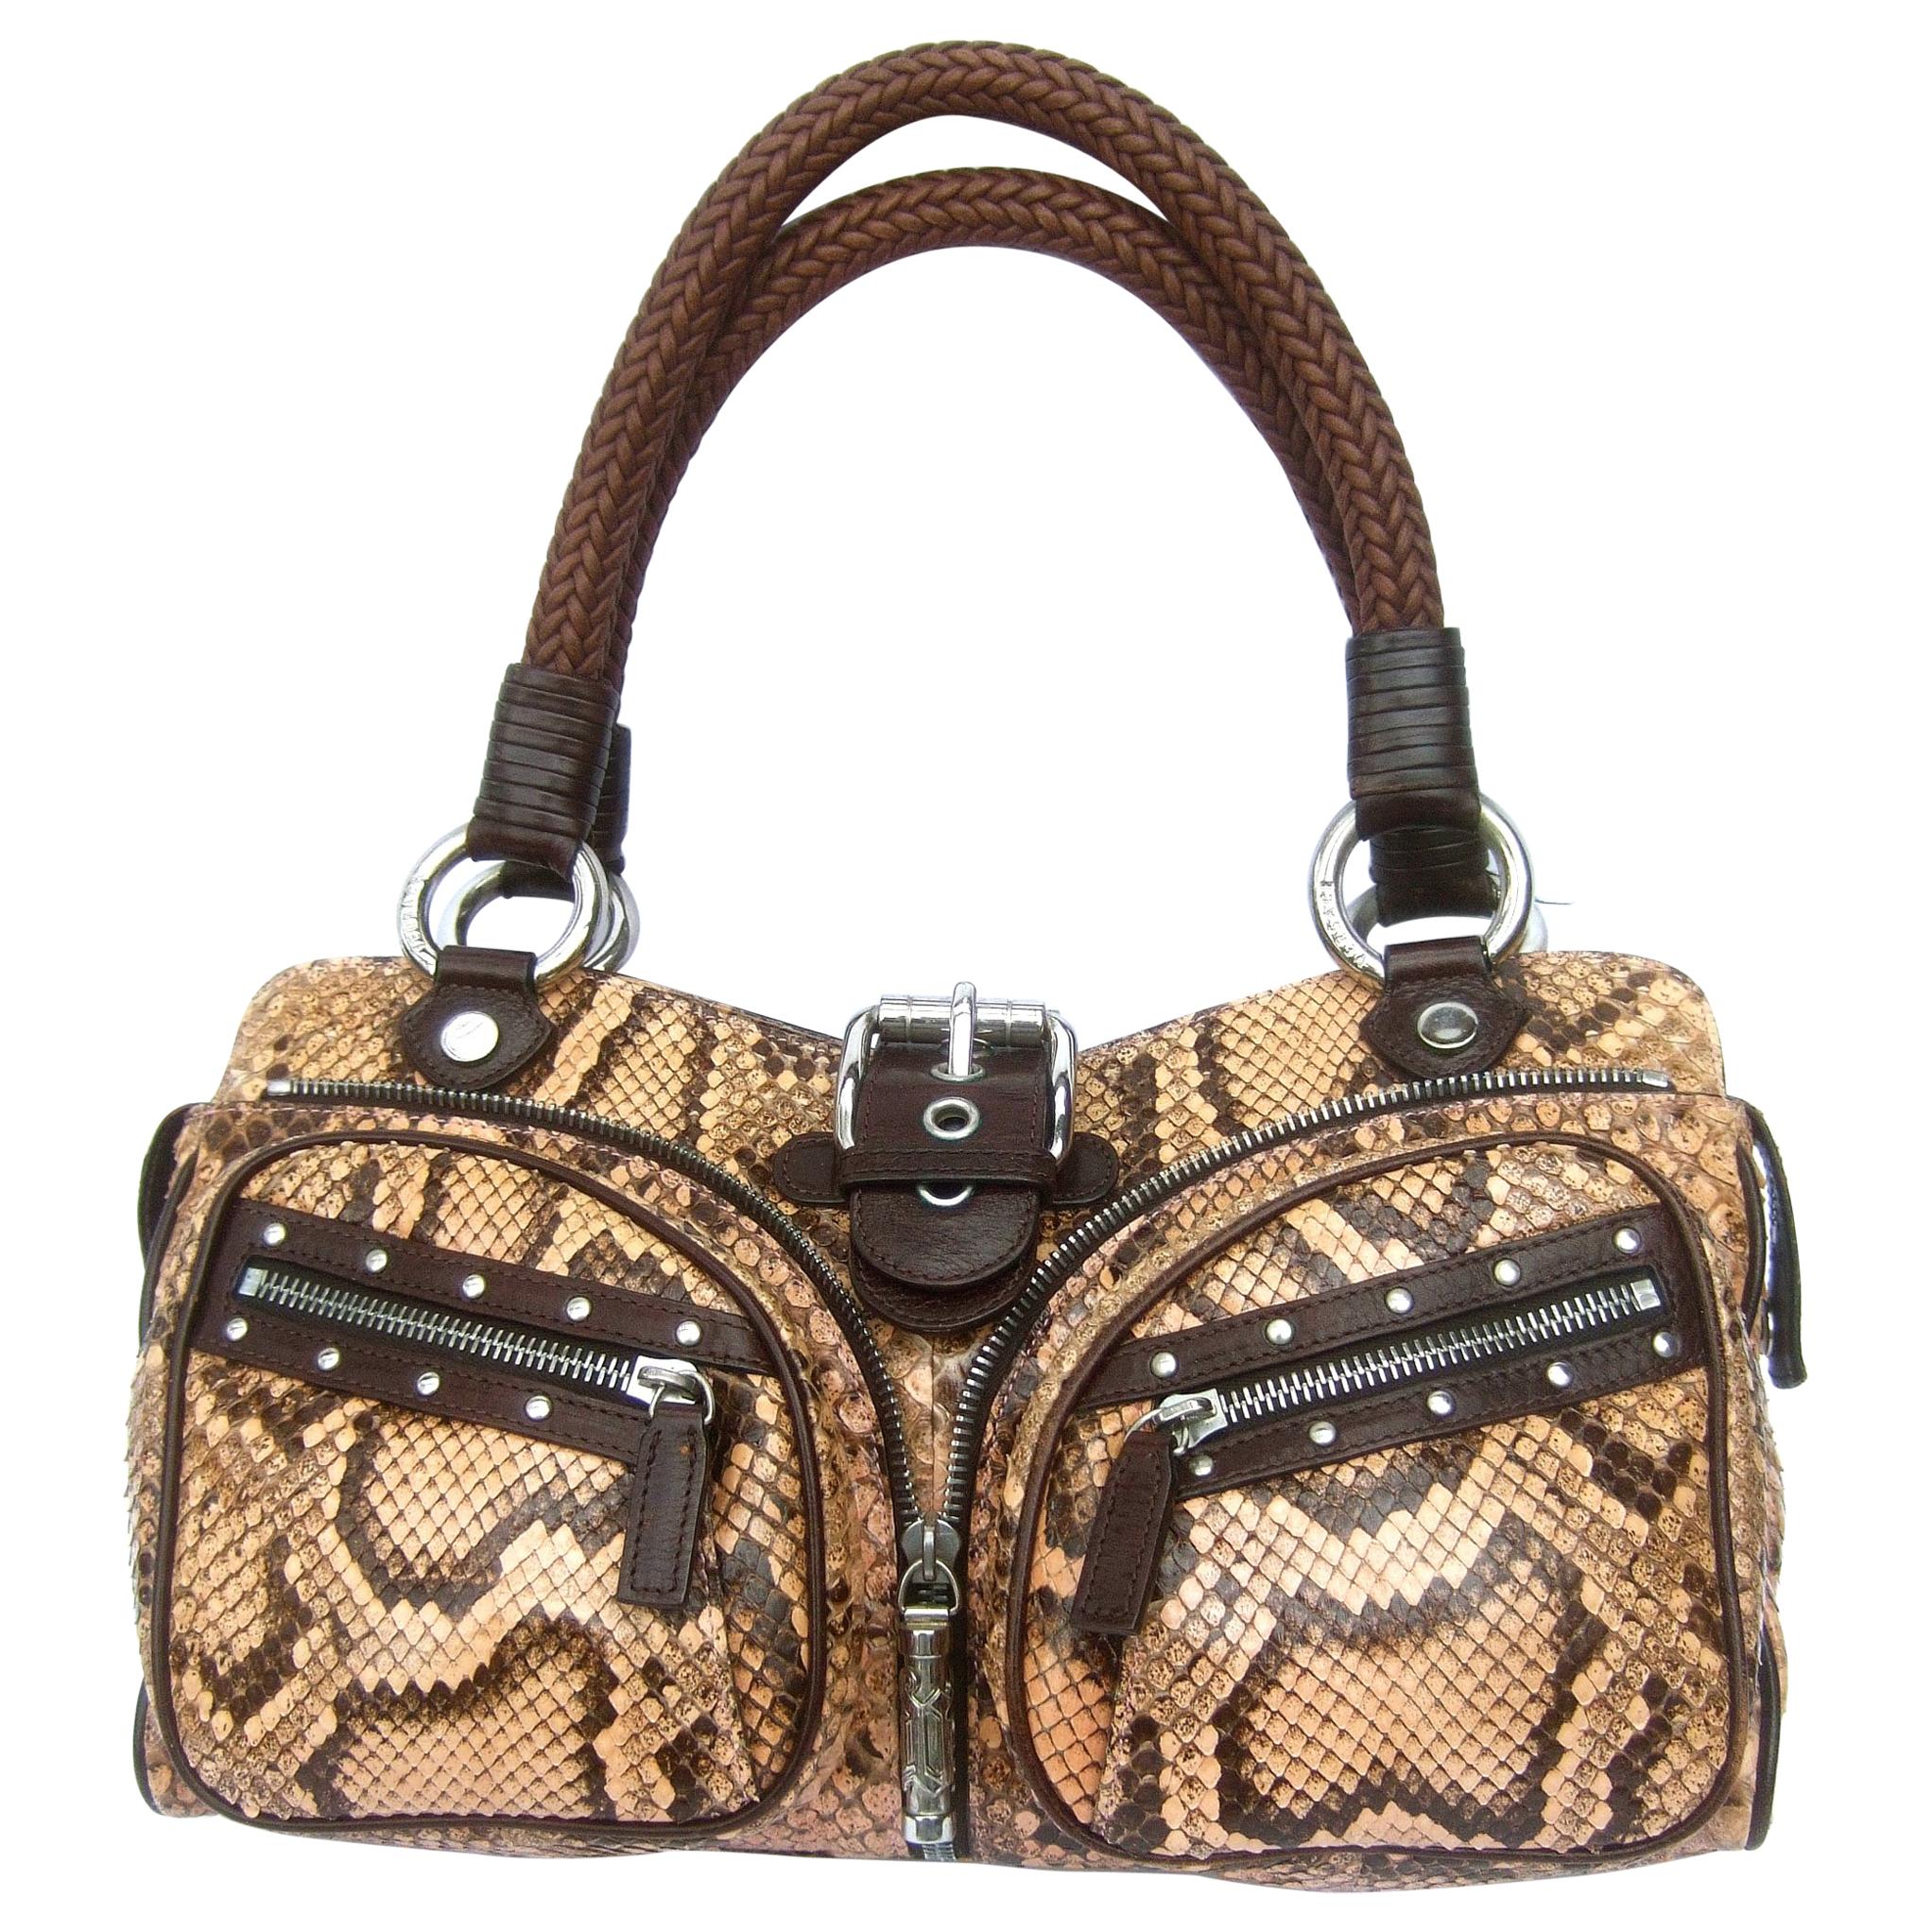 Versace Snakeskin Leather Trim Italian Handbag circa 1990s